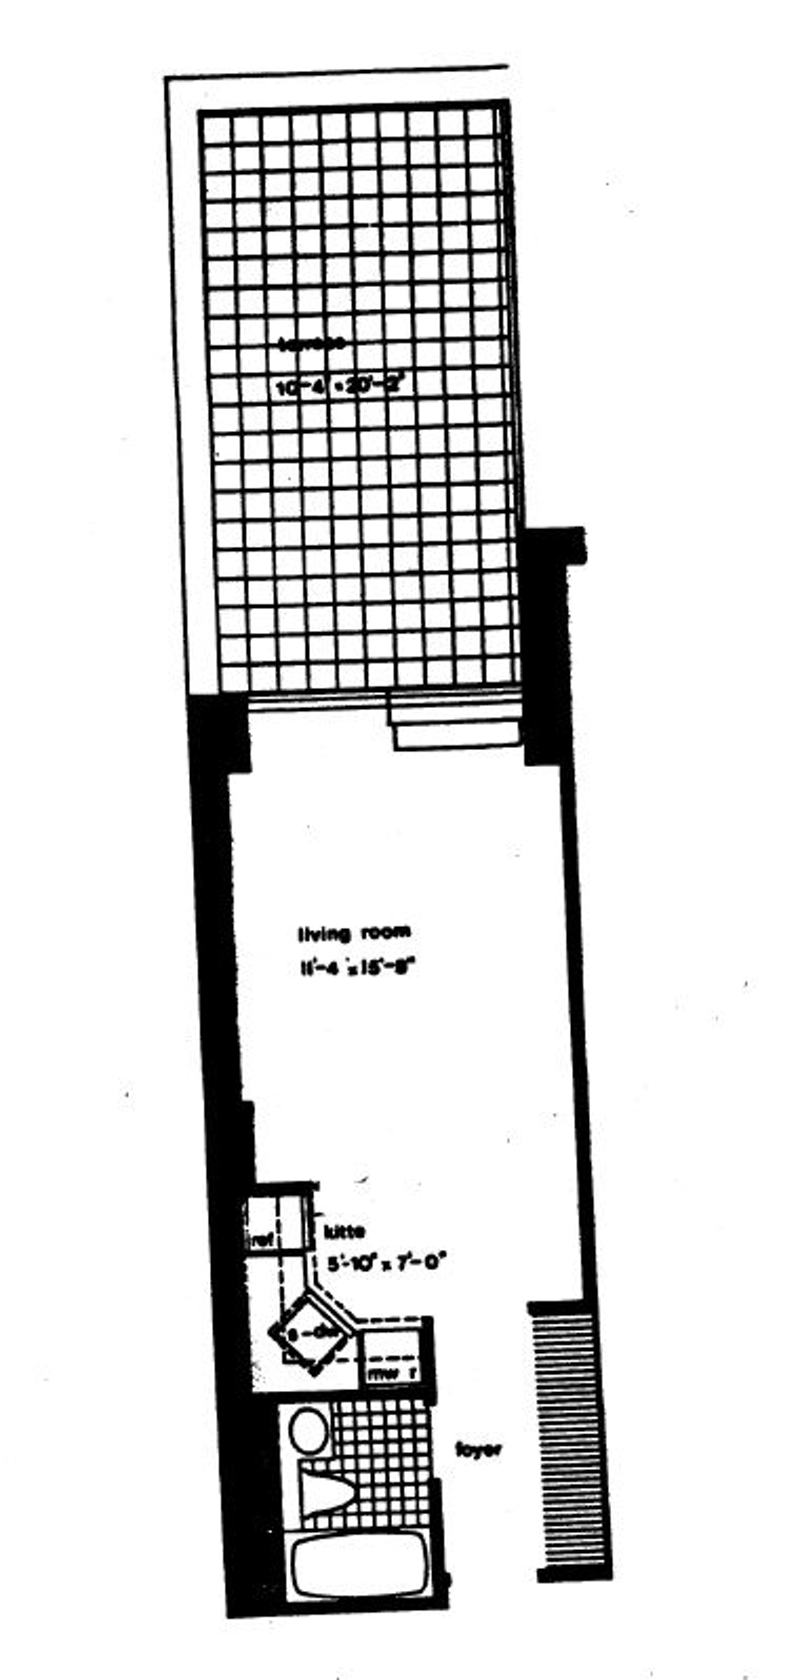 Floorplan for 130 West 79th Street, 2B